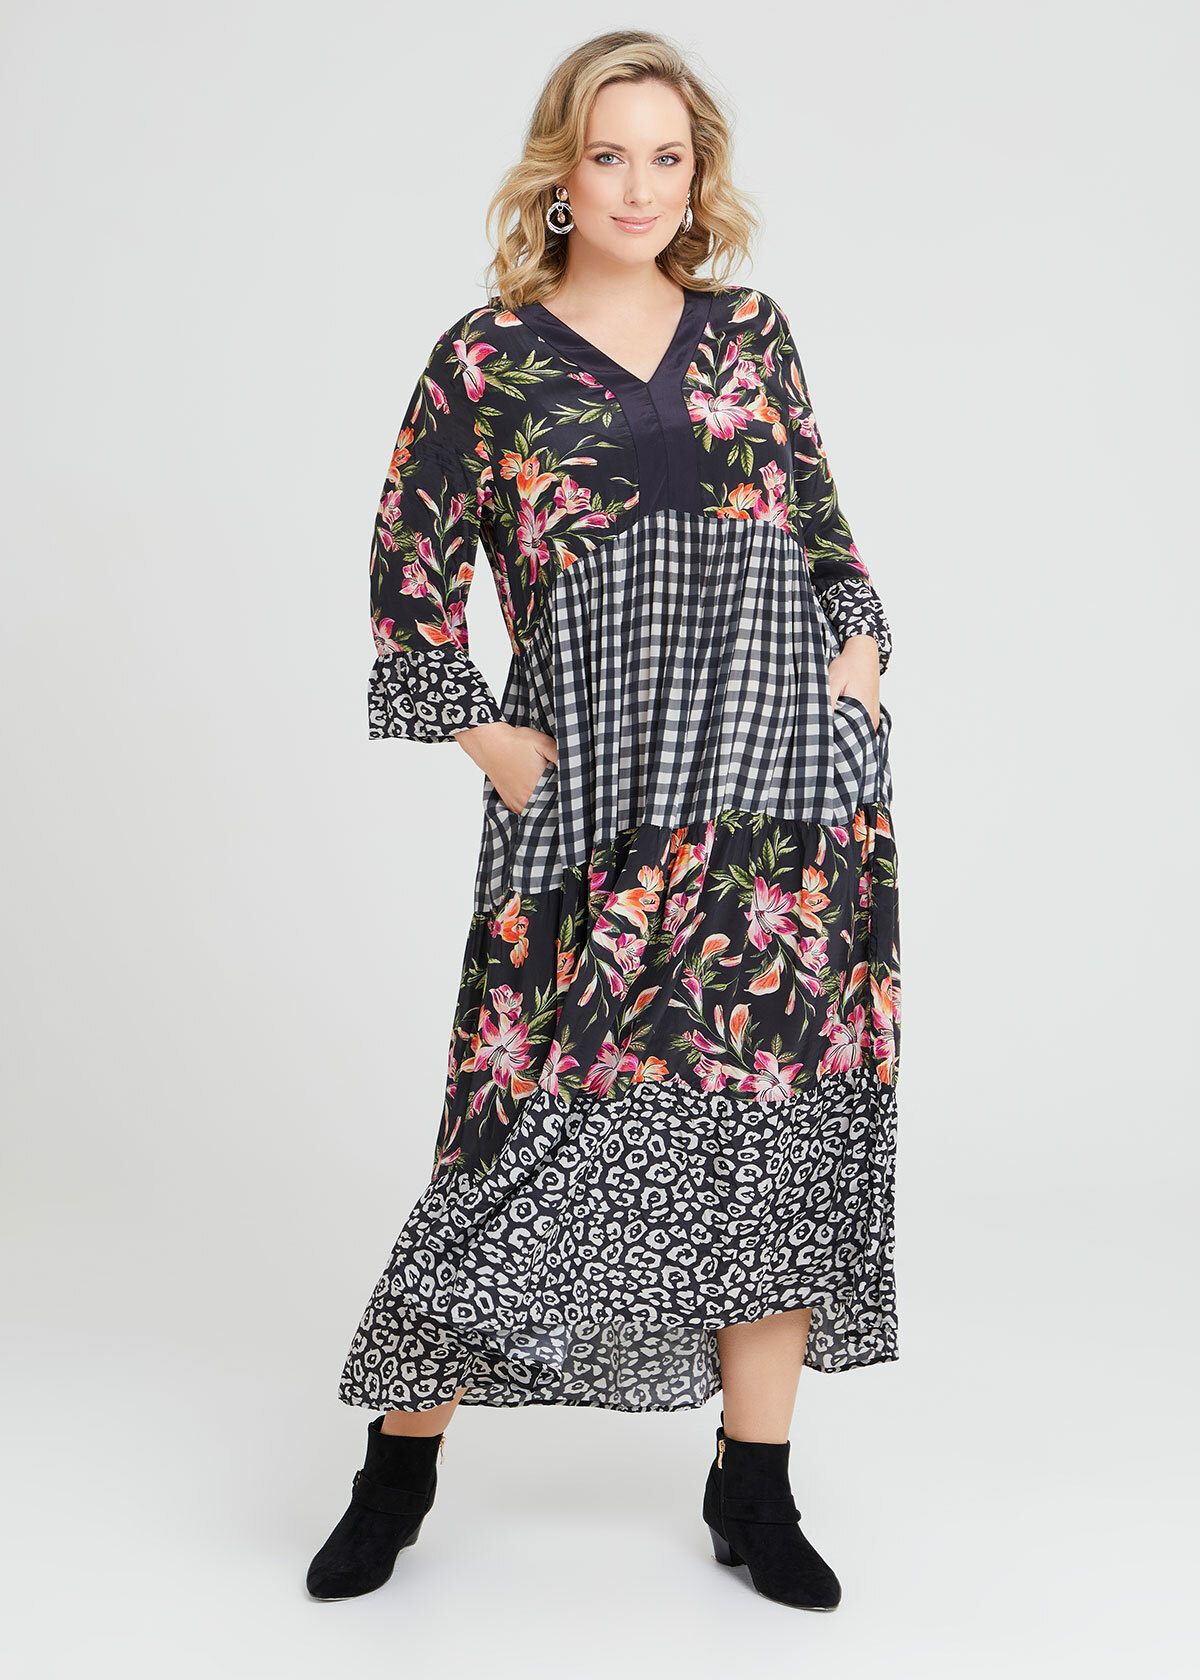 Shop Plus Size Natural Connection Tier Dress in Print | Sizes 12-30 ...